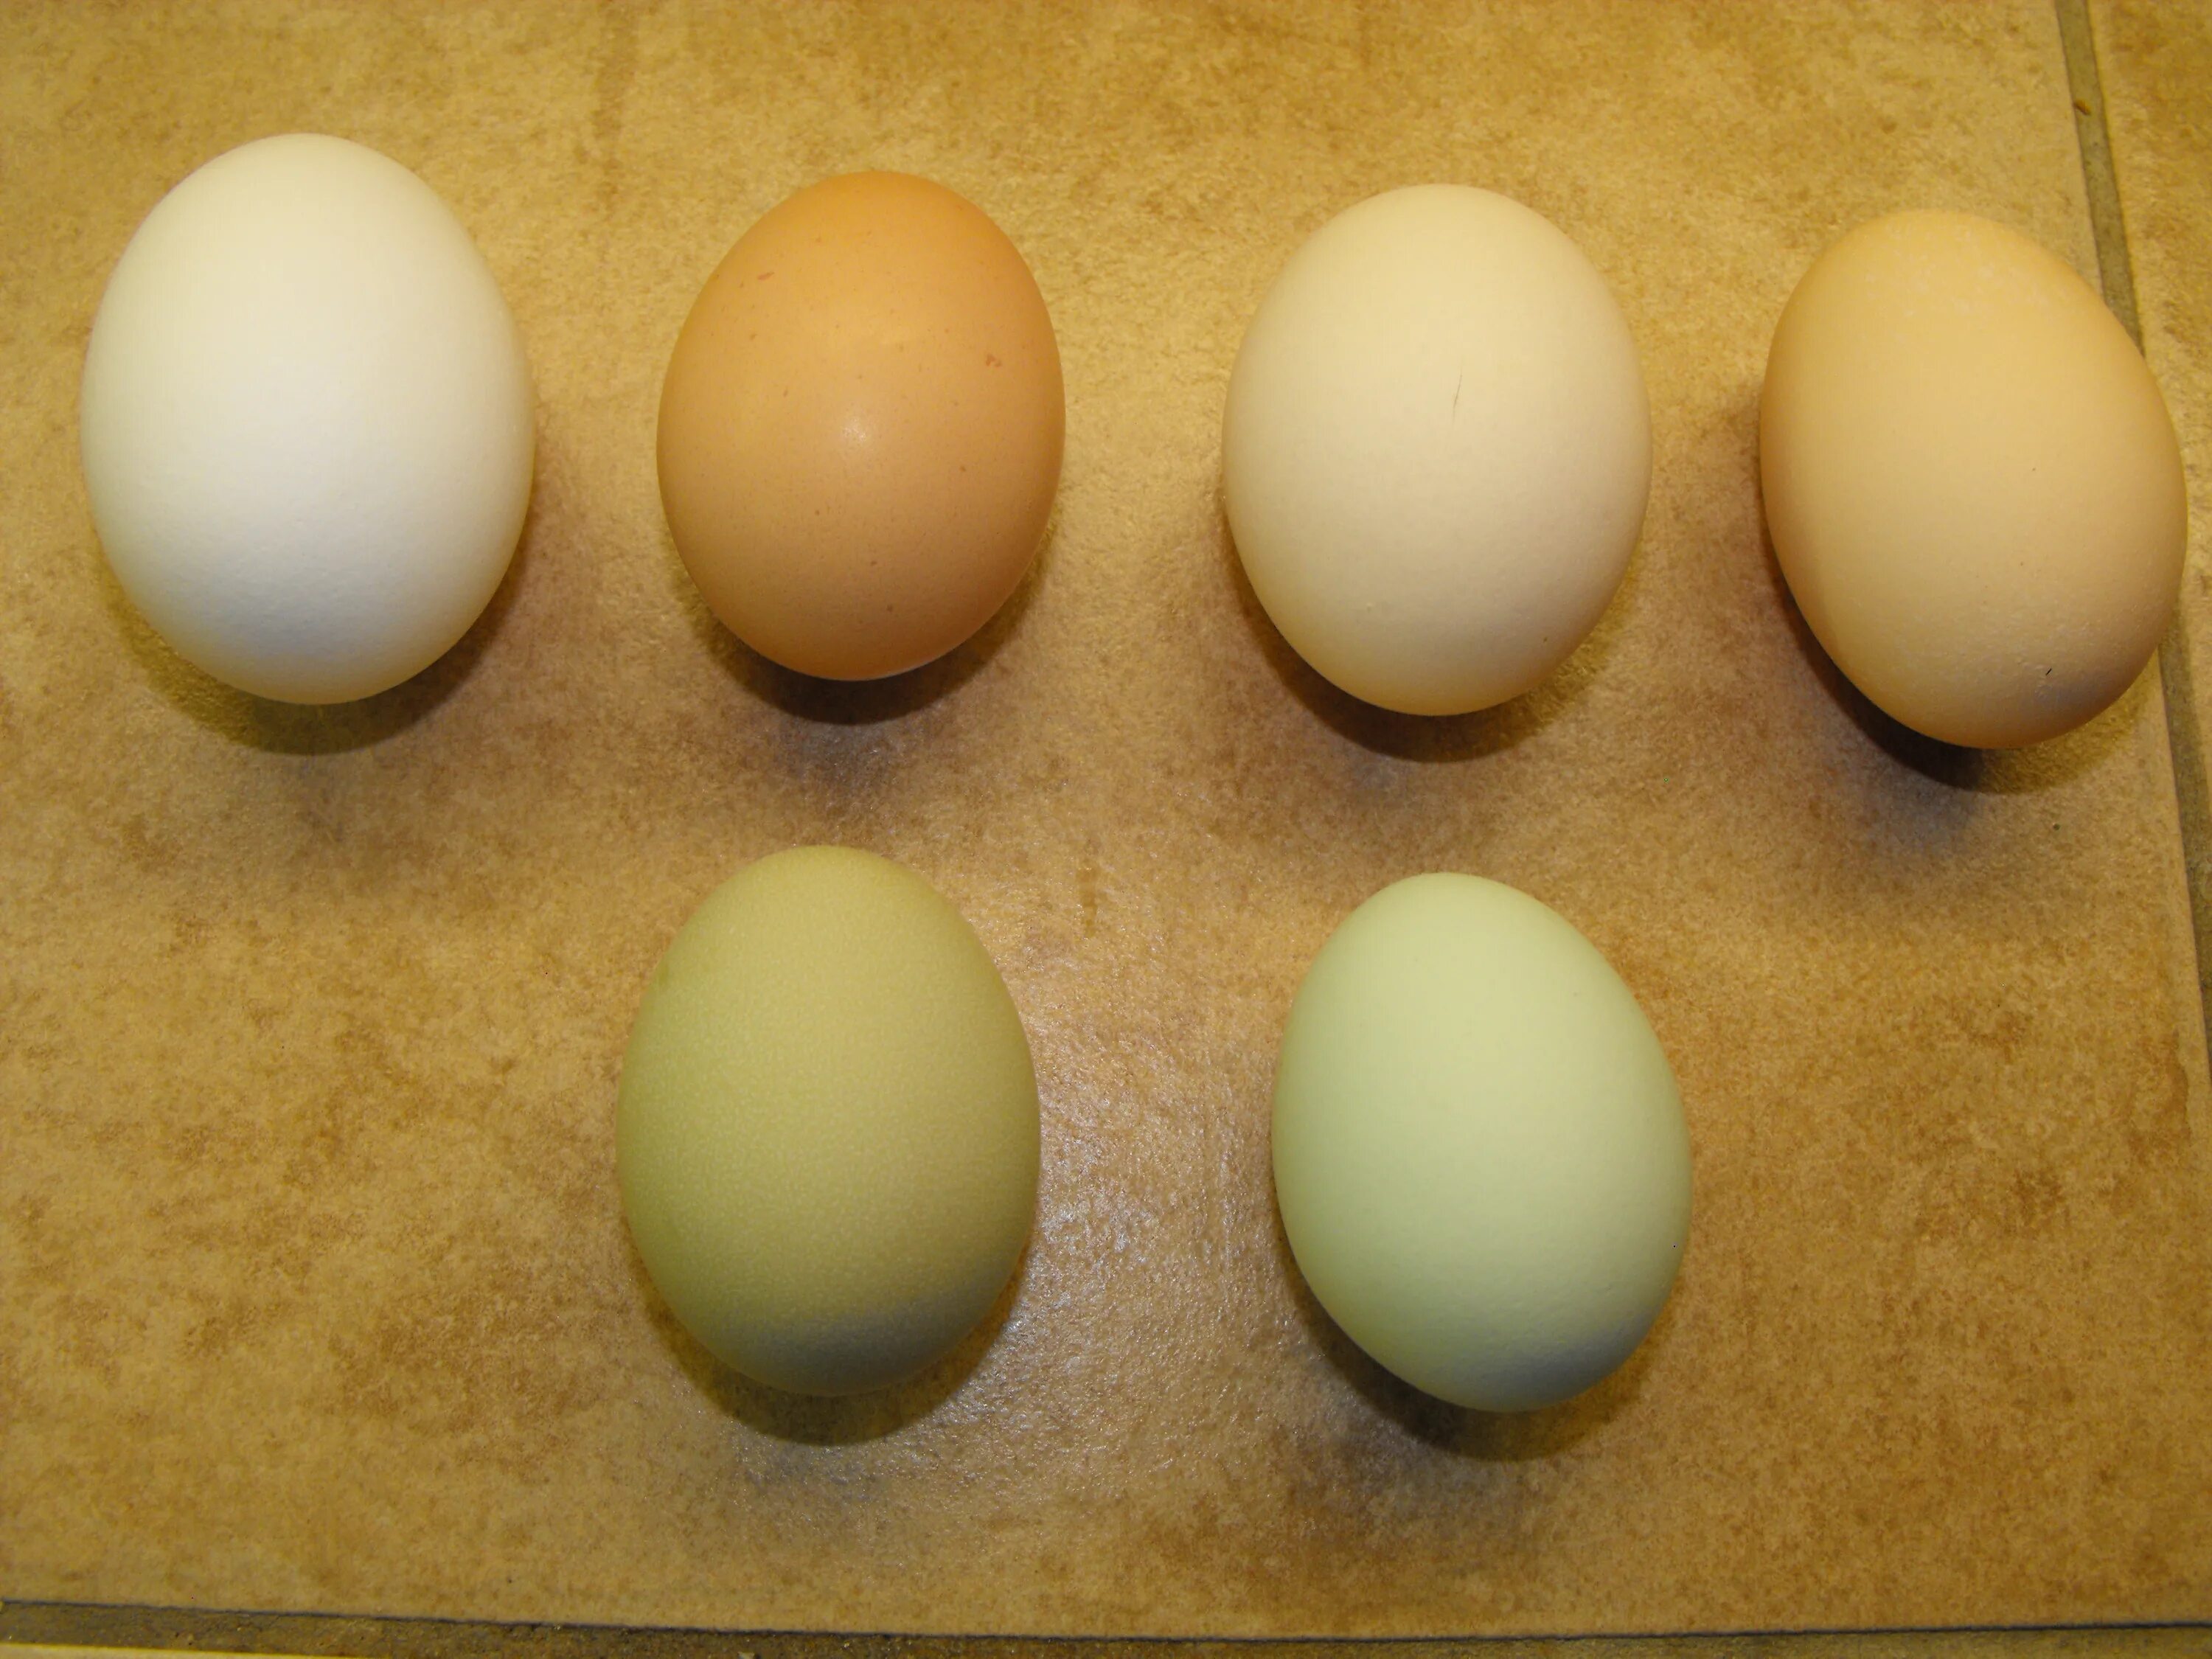 Купить яйца брама. Яйца кур Брама. Яйца кур породы Брама. Брама яйца и цыплята. Курица породы Брама яйца.